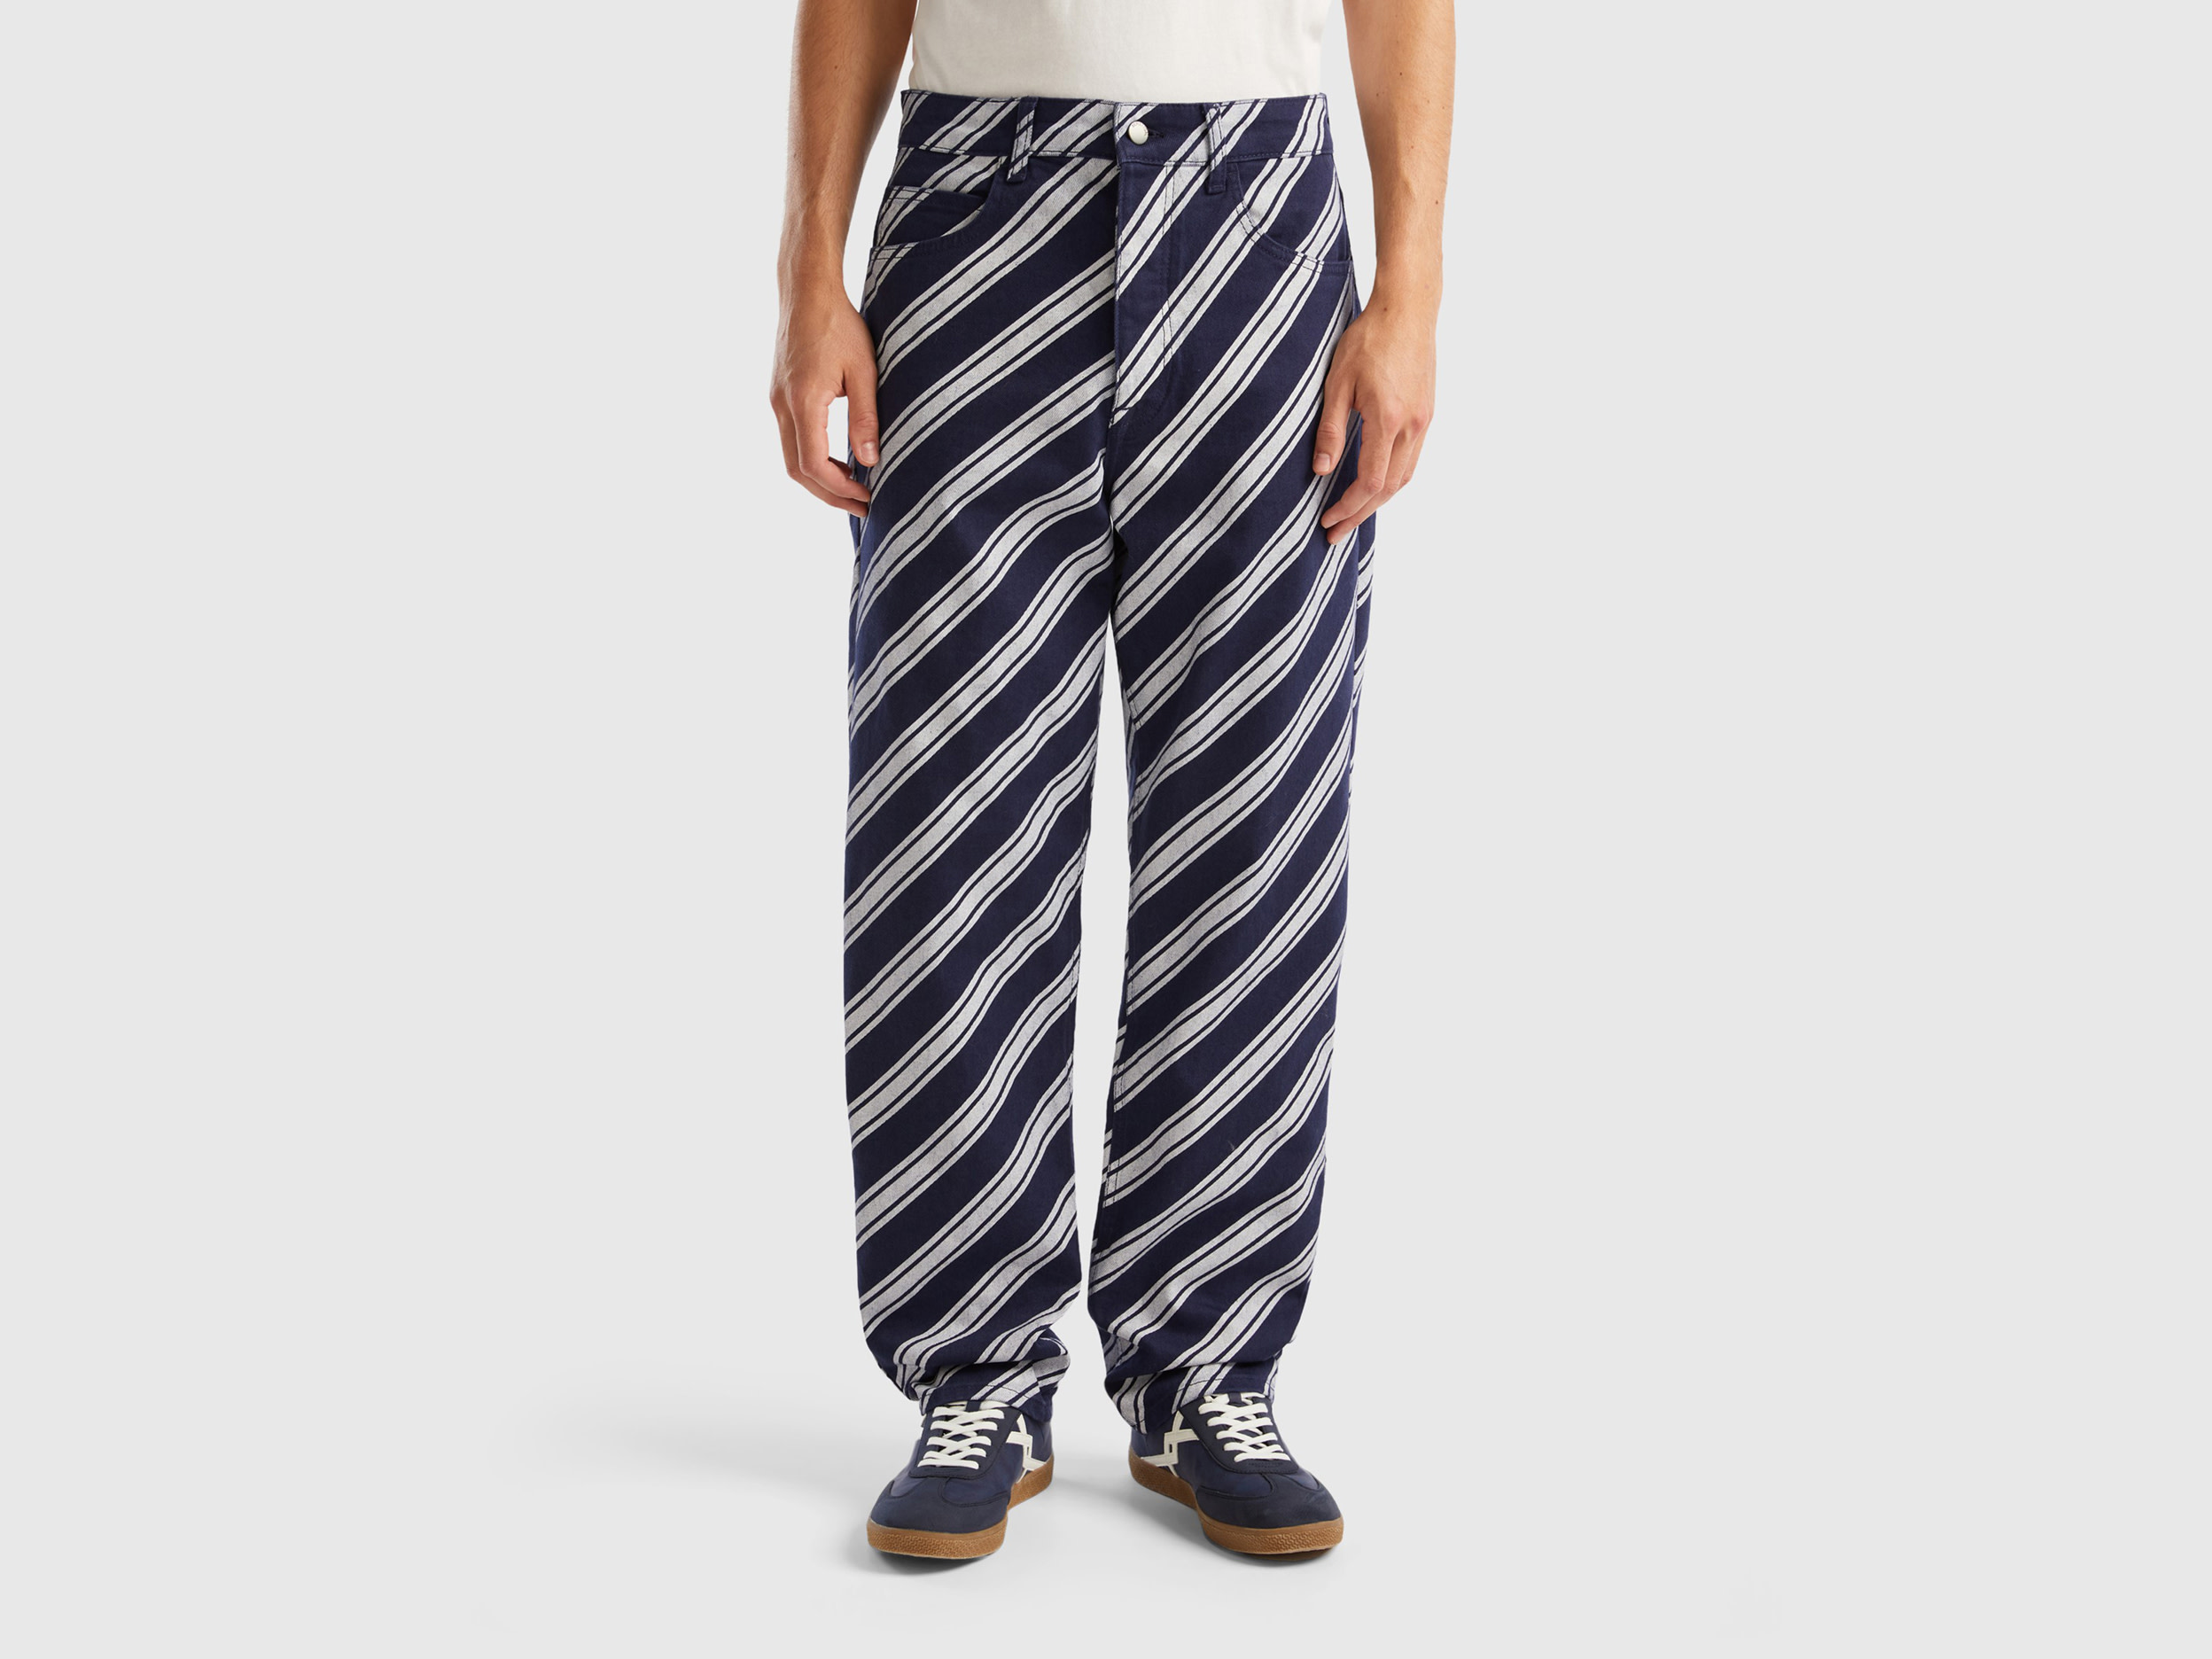 Benetton, Regimental Striped Trousers, size 32, Multi-color, Men